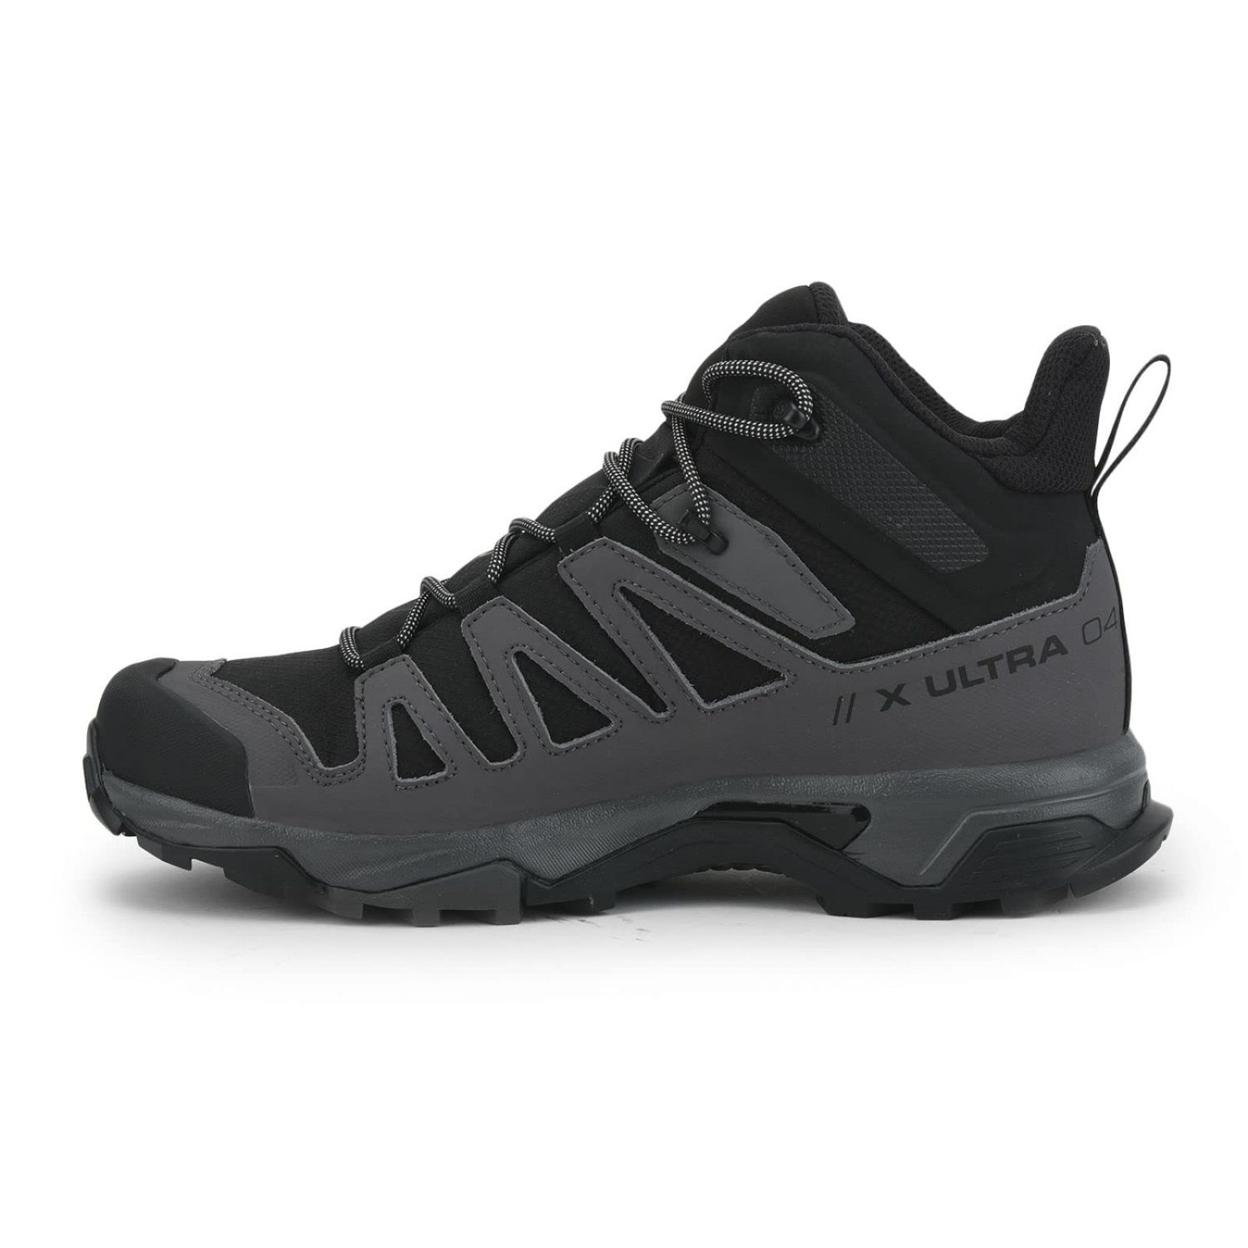 Salomon Men's X Ultra 4 Mid GORE-TEX Hiking Boots Black/Magnet/Pearl Blue - L41383400 Medium BLACK/MAGNET/PEARL BLUE - BLACK/MAGNET/PEARL BL